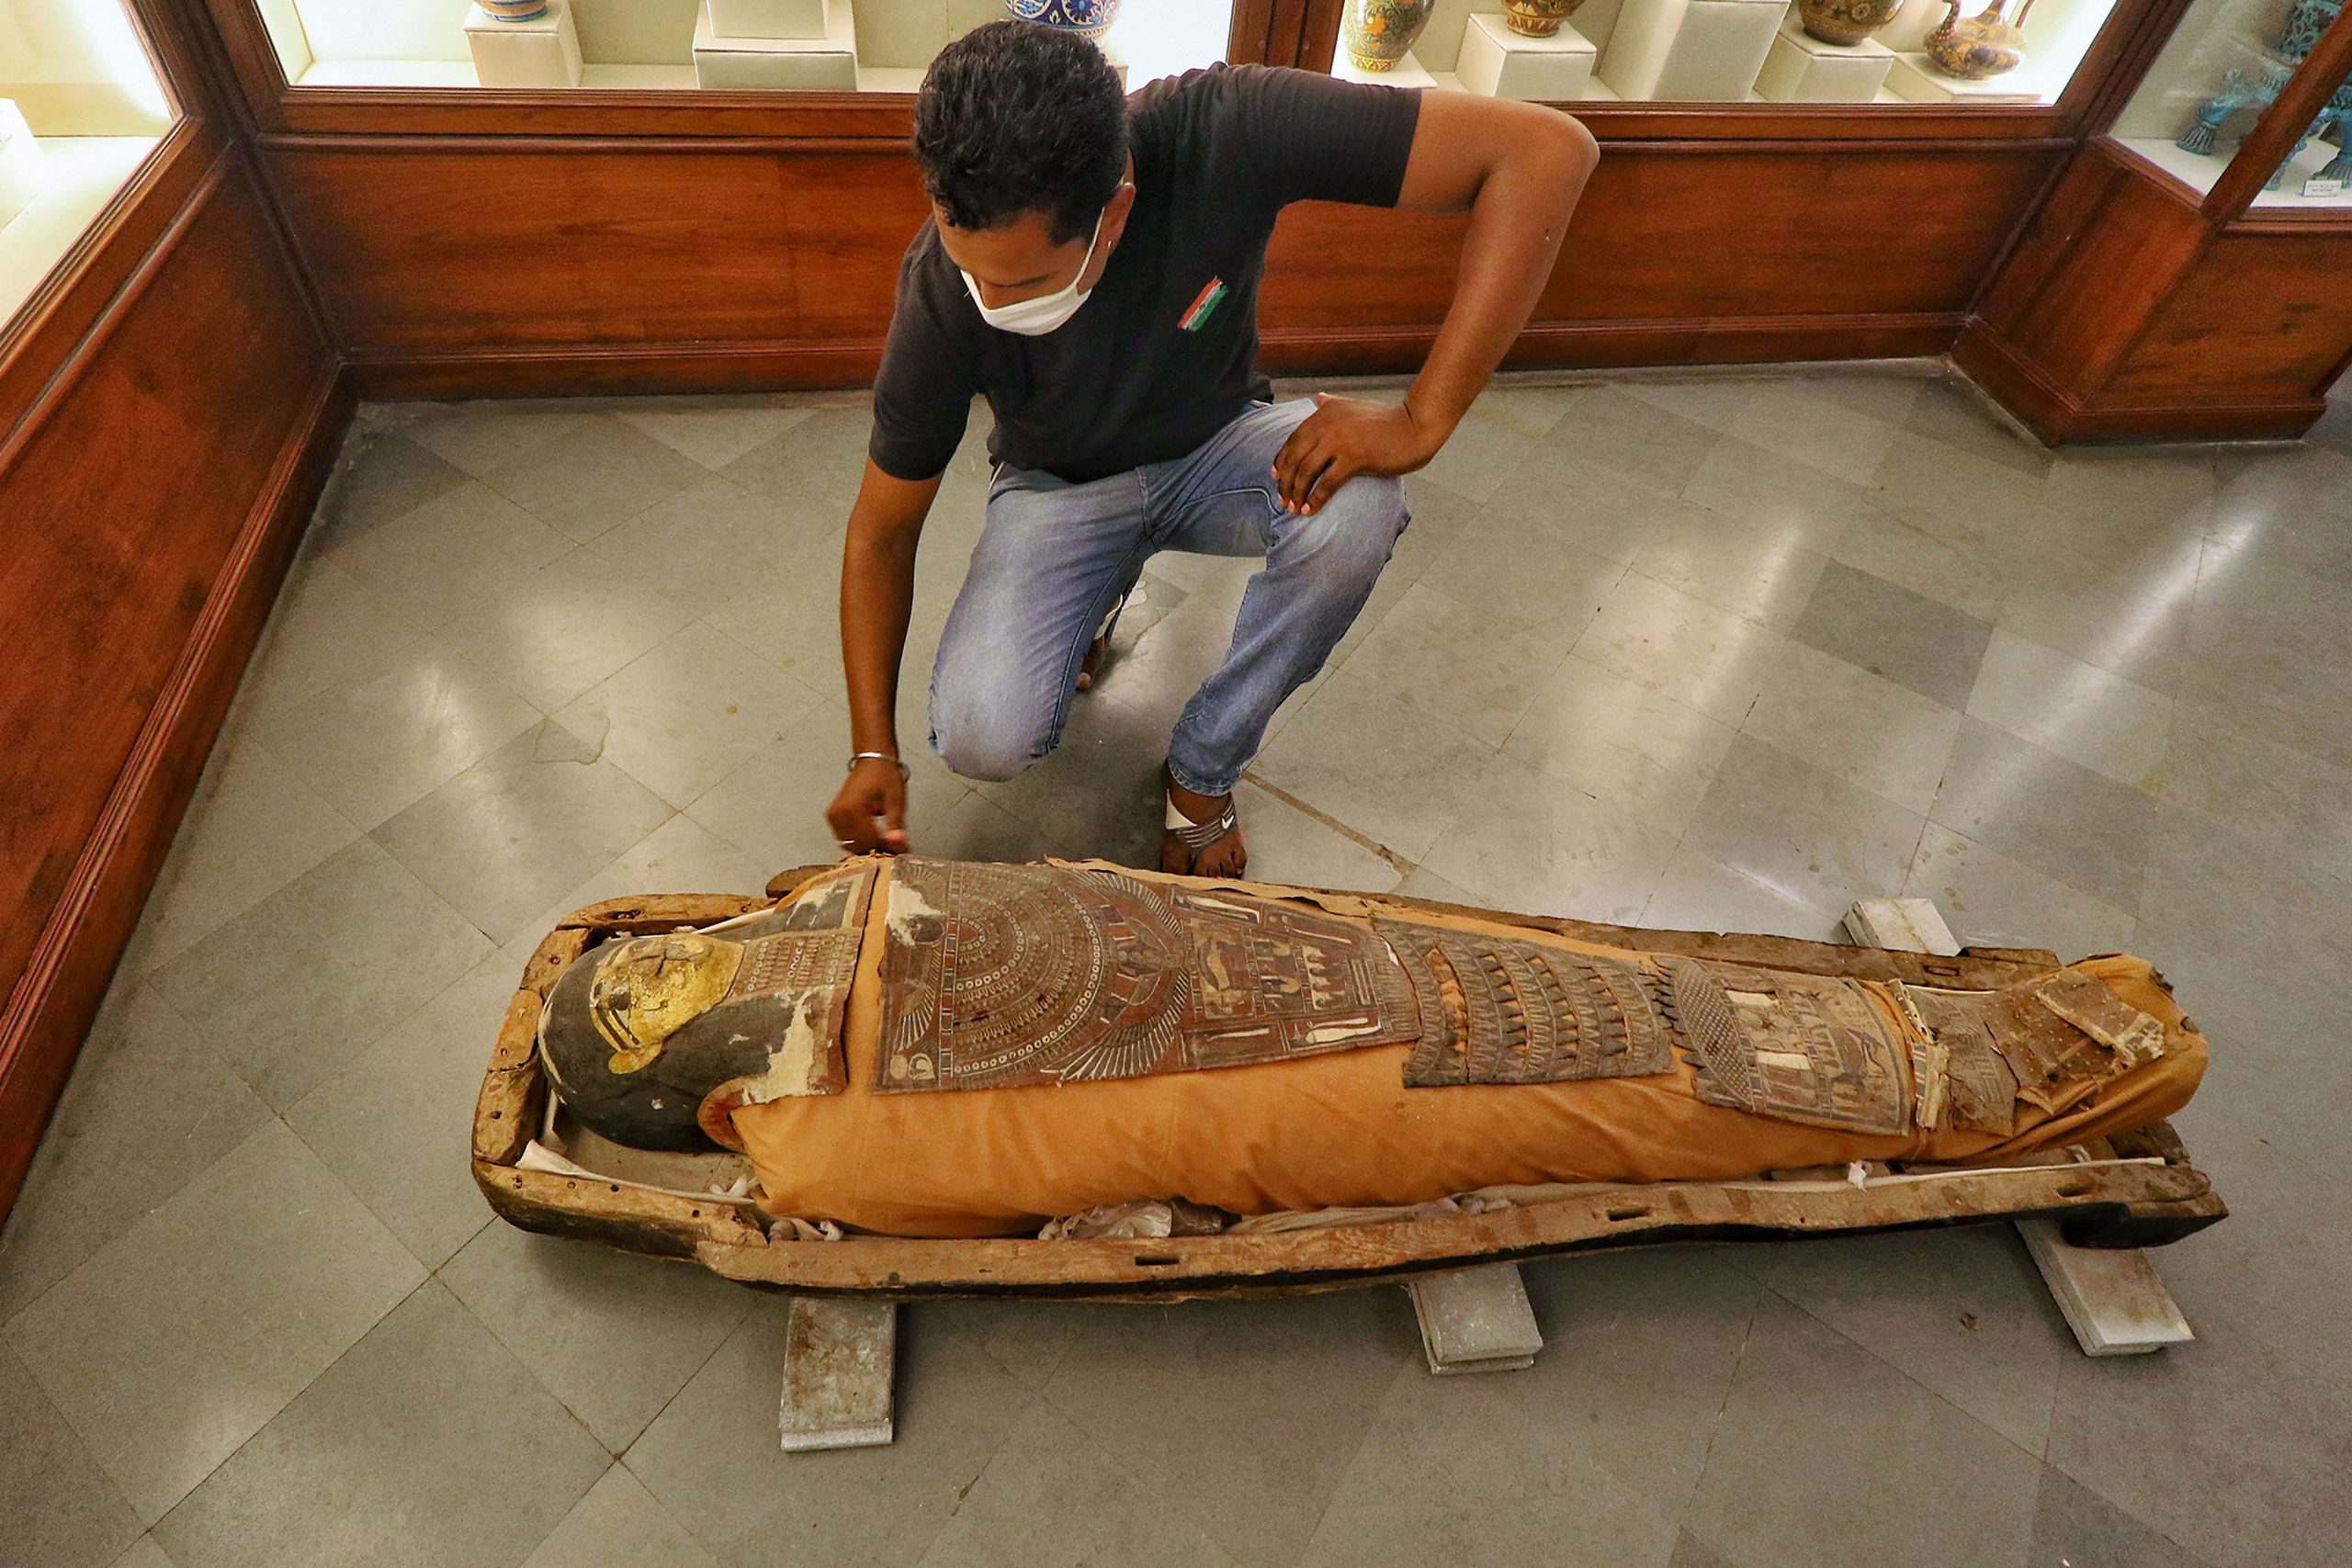 Italian hospital uses CT scan to study Egyptian mummy